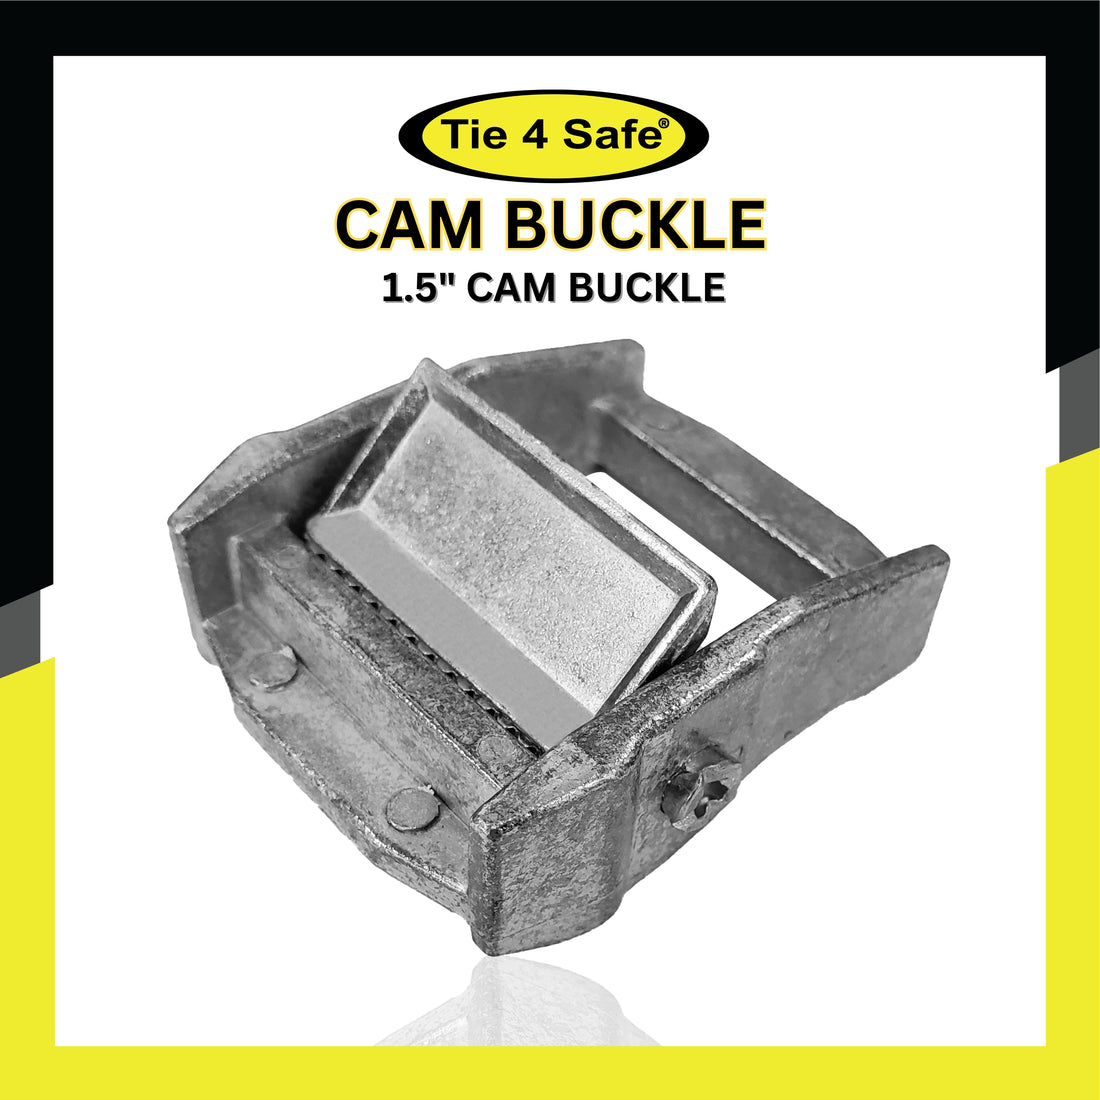 1.5" Cam Buckle - CB04-735